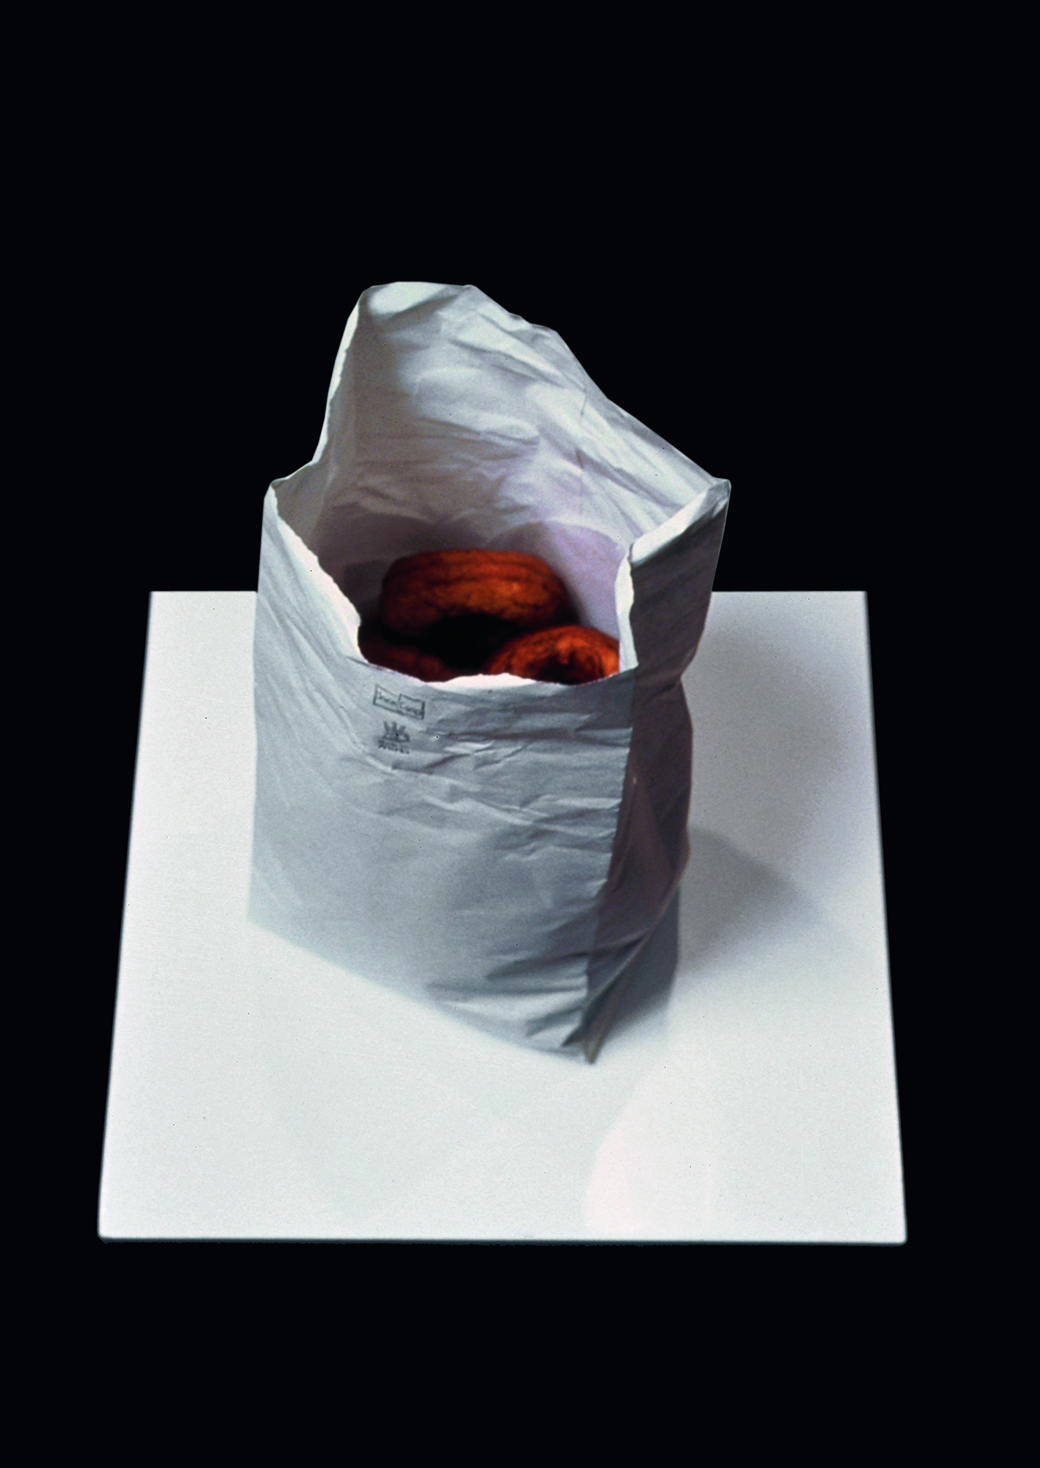 Eating Robert Gober’s Bag of Donuts | Art21 Magazine